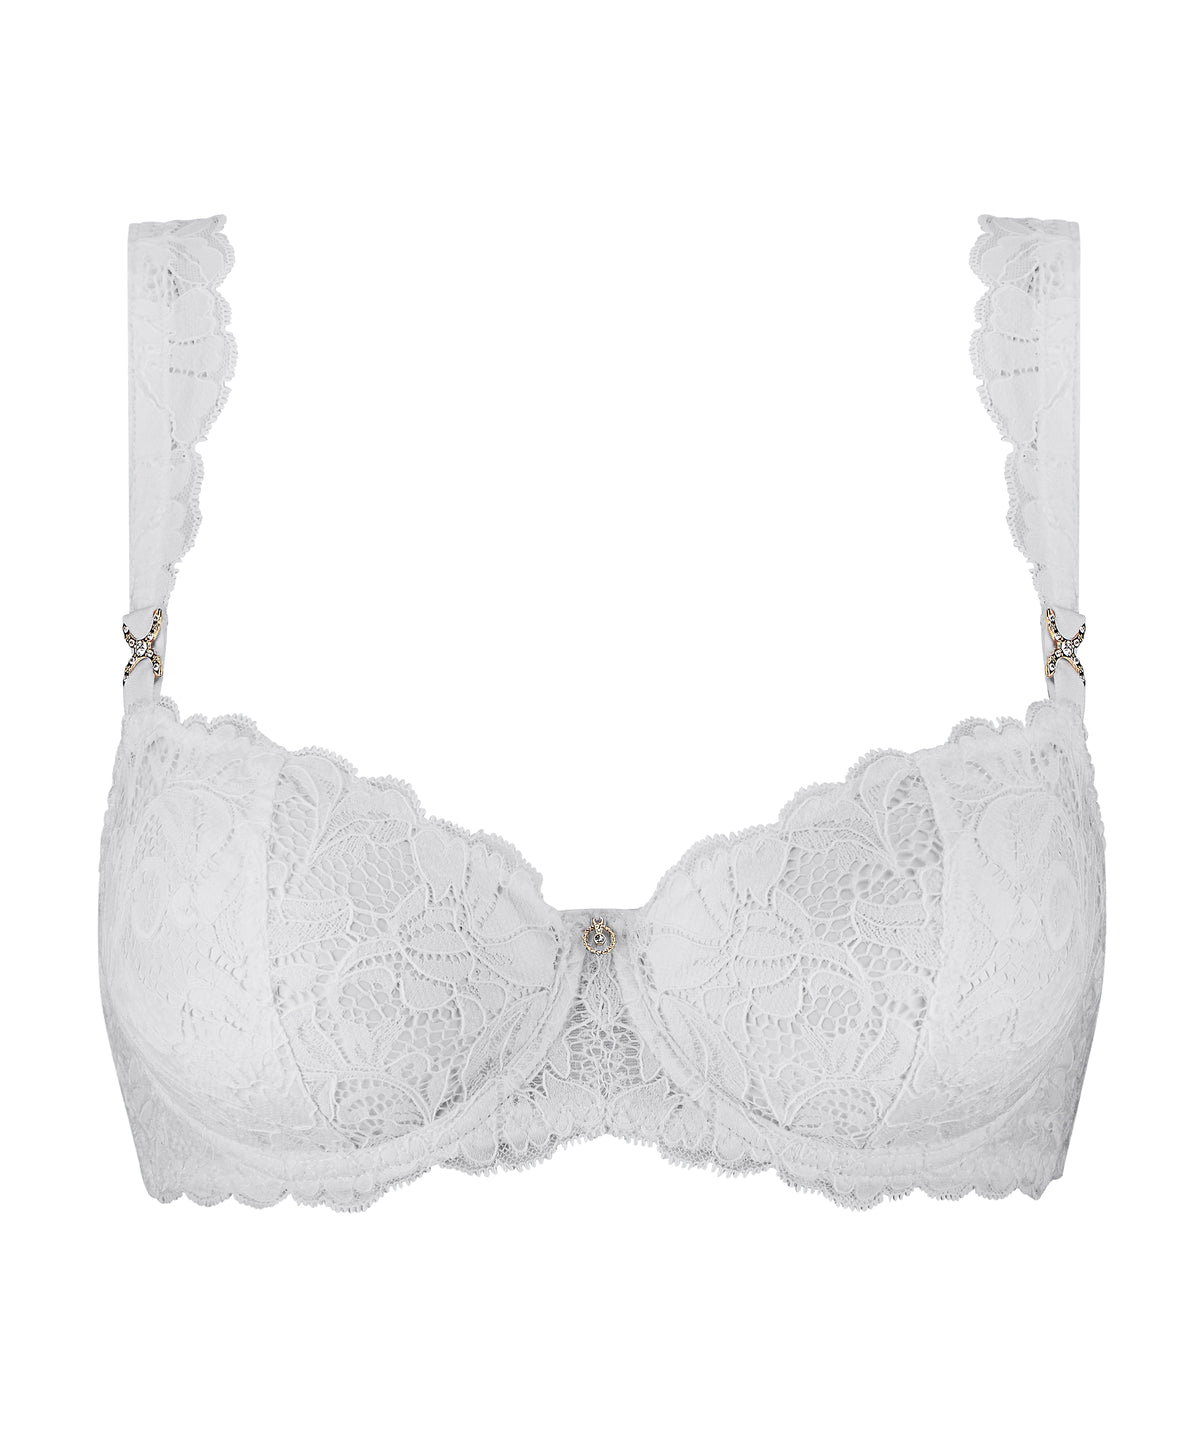 SIMPLY ME SATIN look underwired white bra 34 - 46 B - F cup nylon spandex  £8.00 - PicClick UK